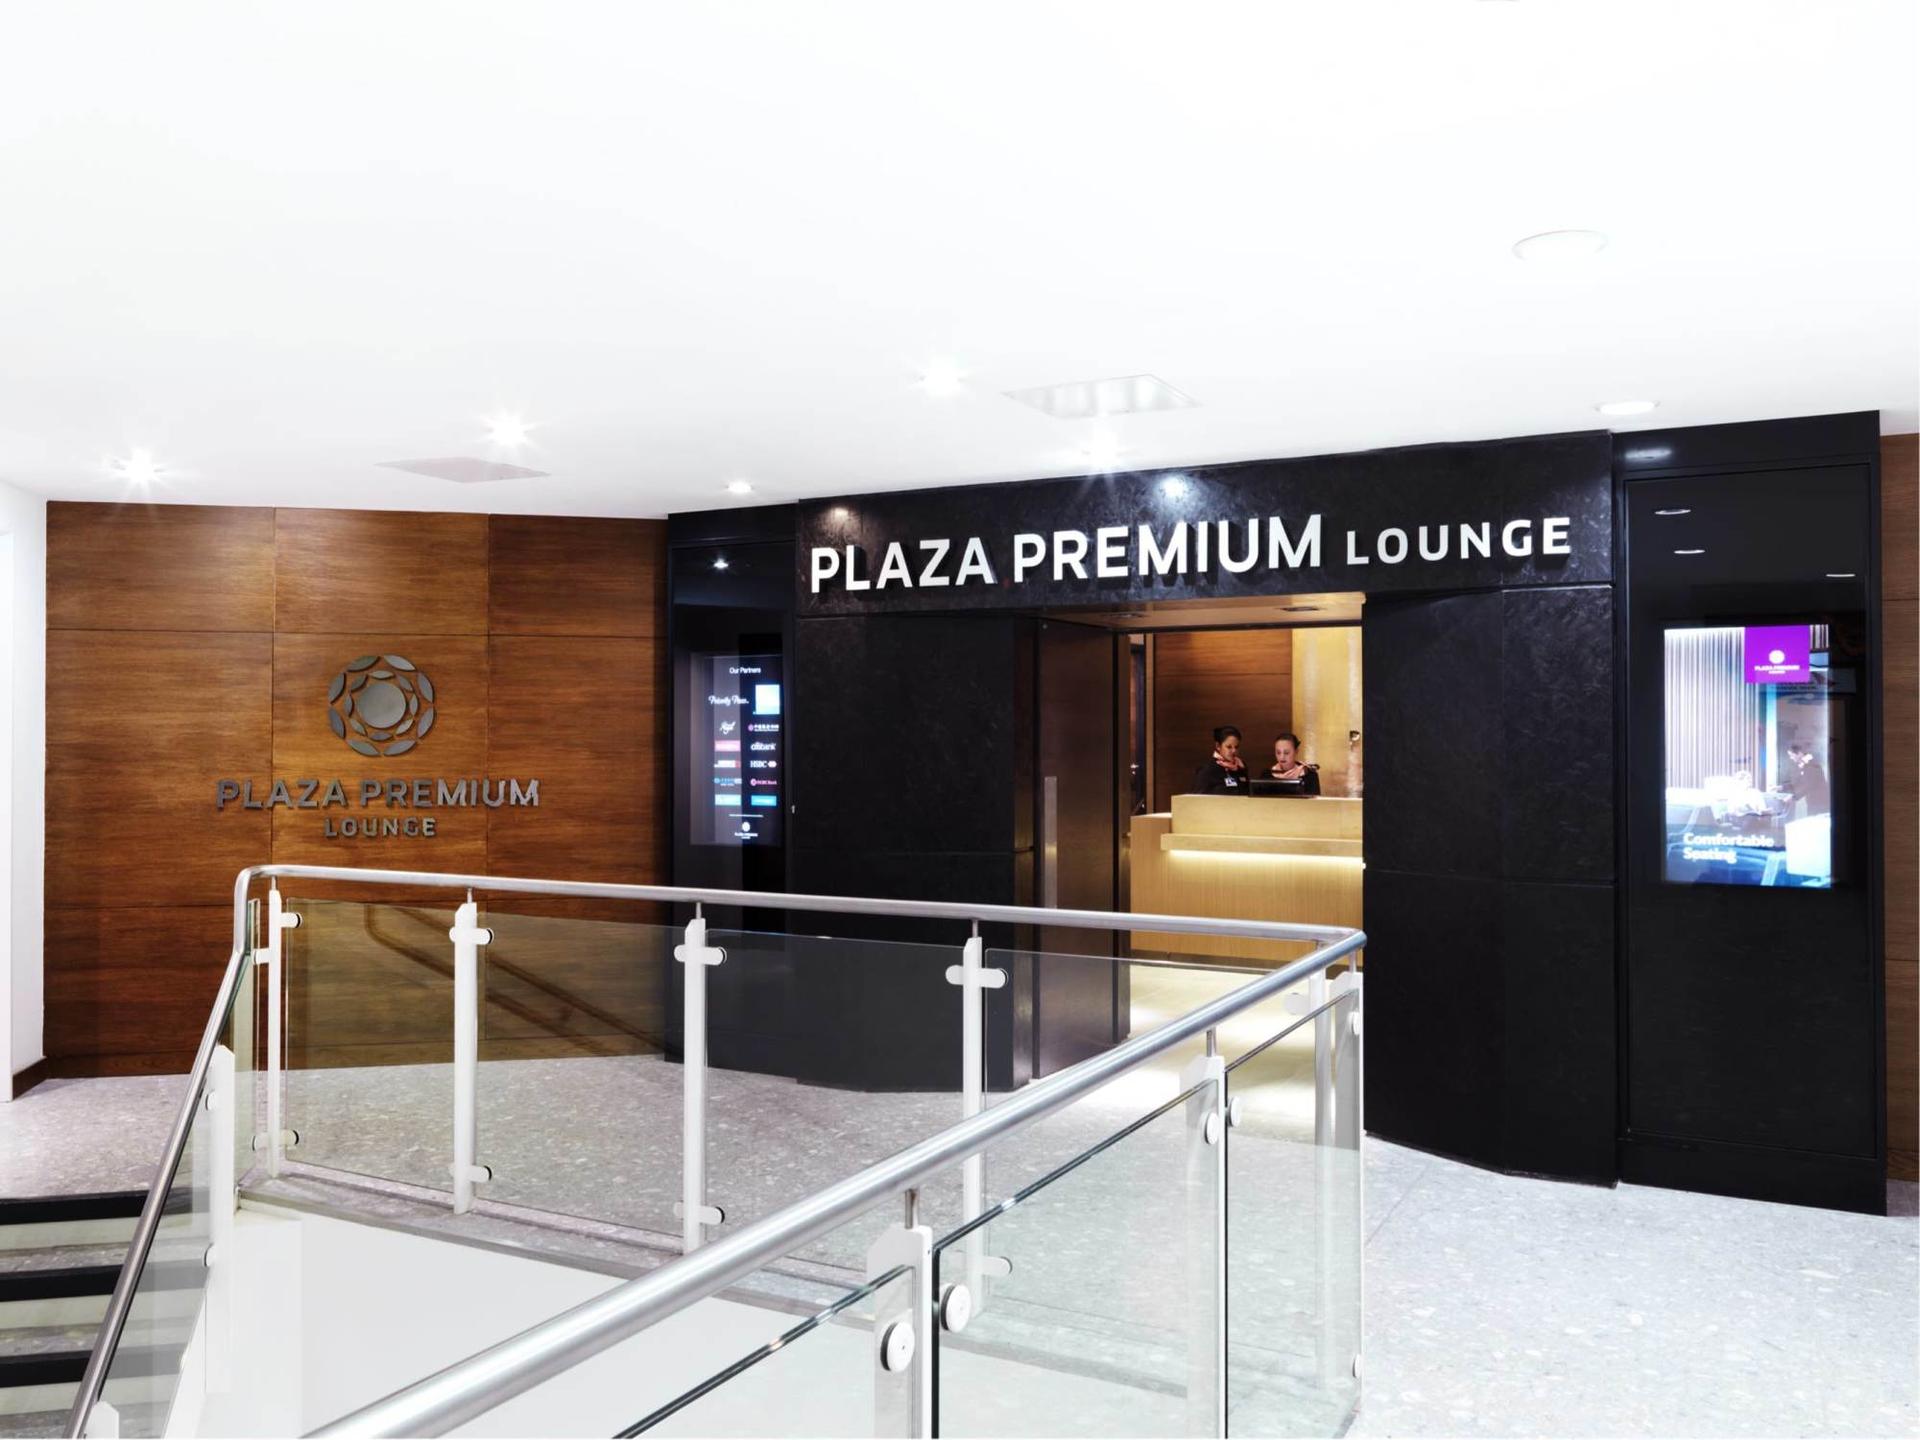 Plaza Premium Lounge image 10 of 22